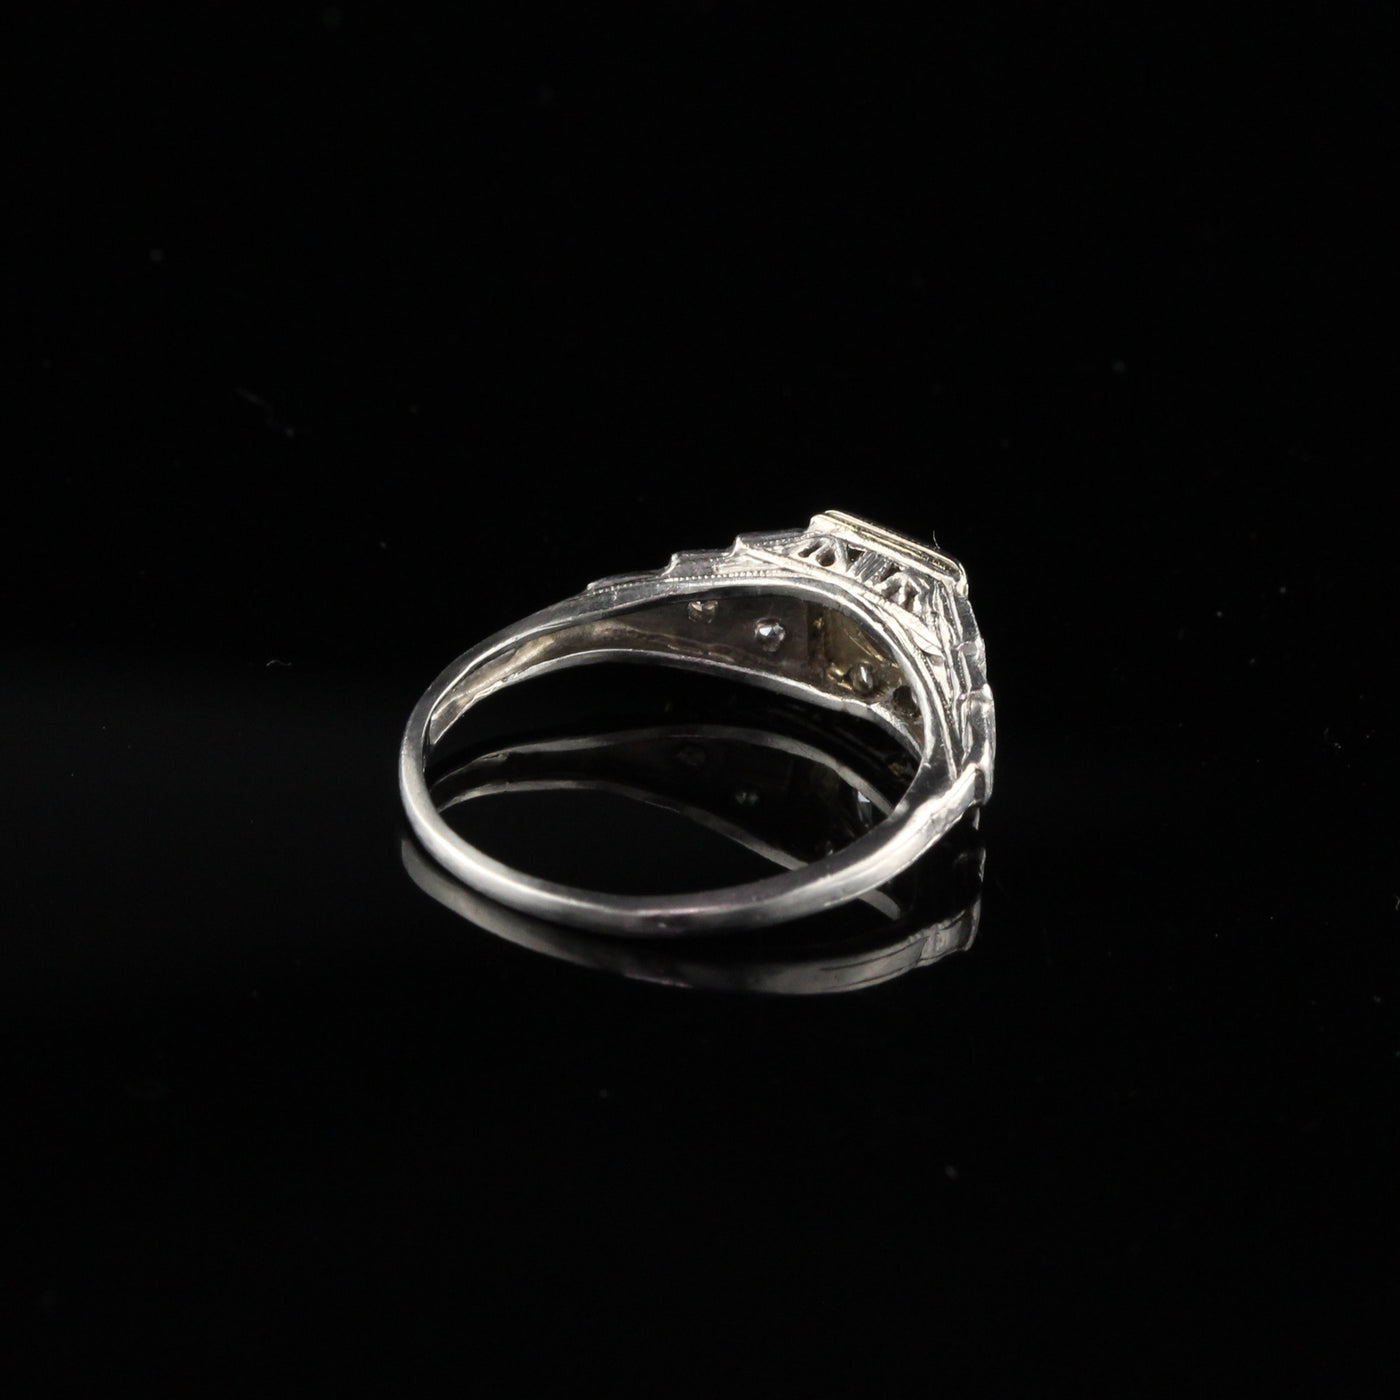 Antique Art Deco Platinum Engagement Ring - Size 6 1/2